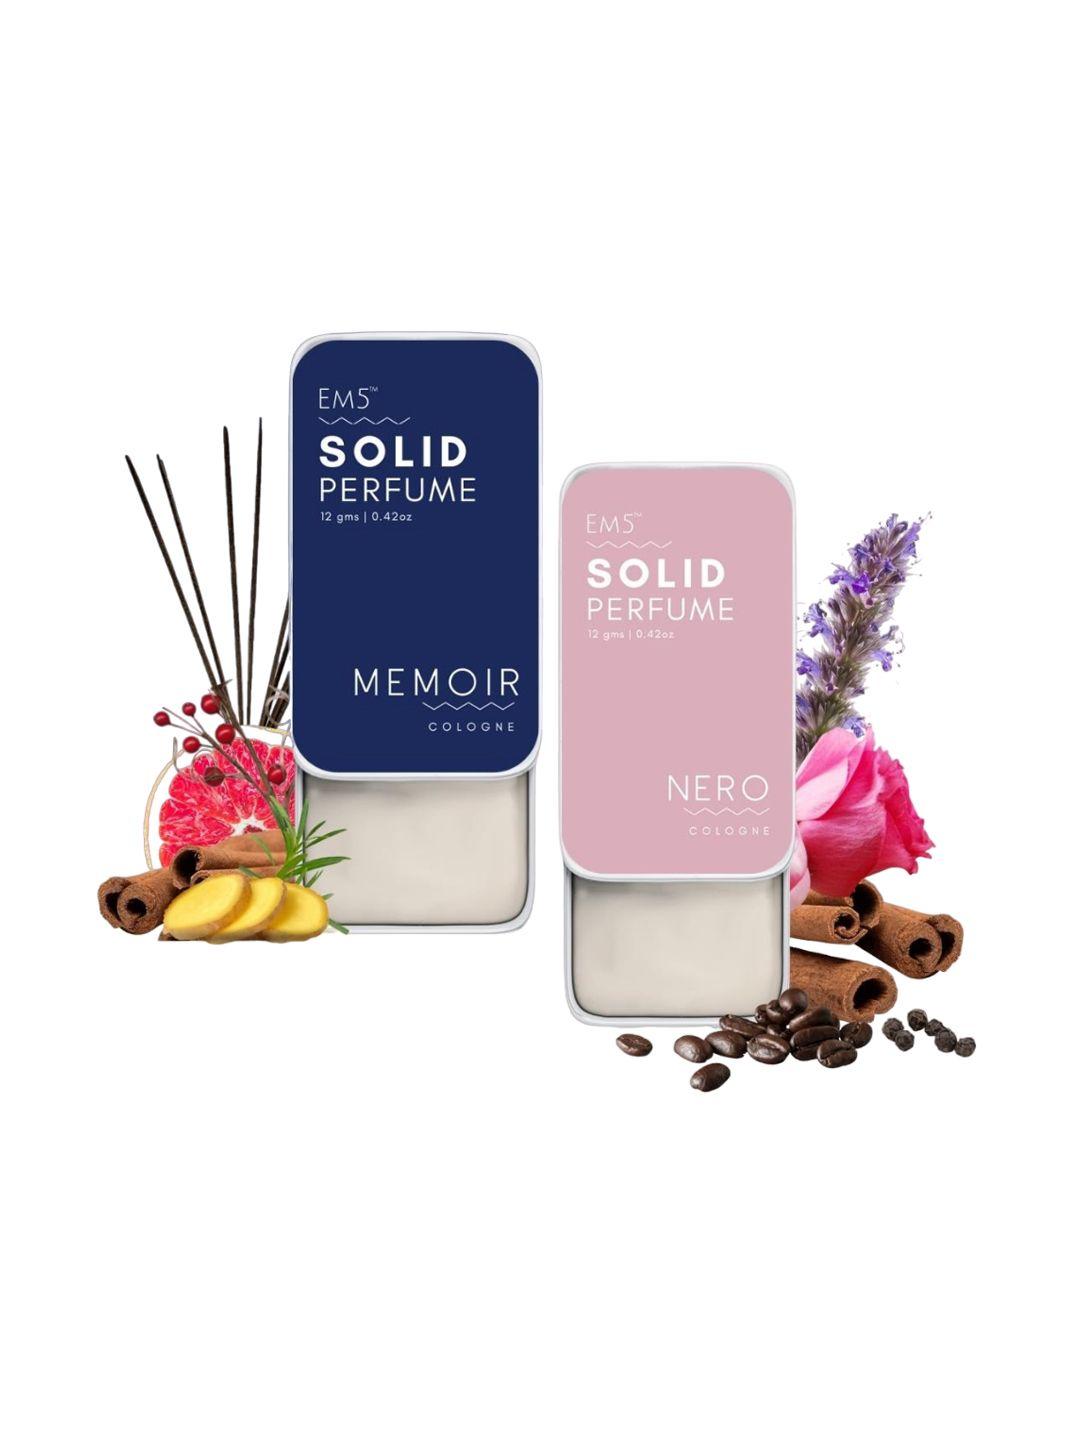 em5 solid 2-pcs memoir-nero perfume - 12g each